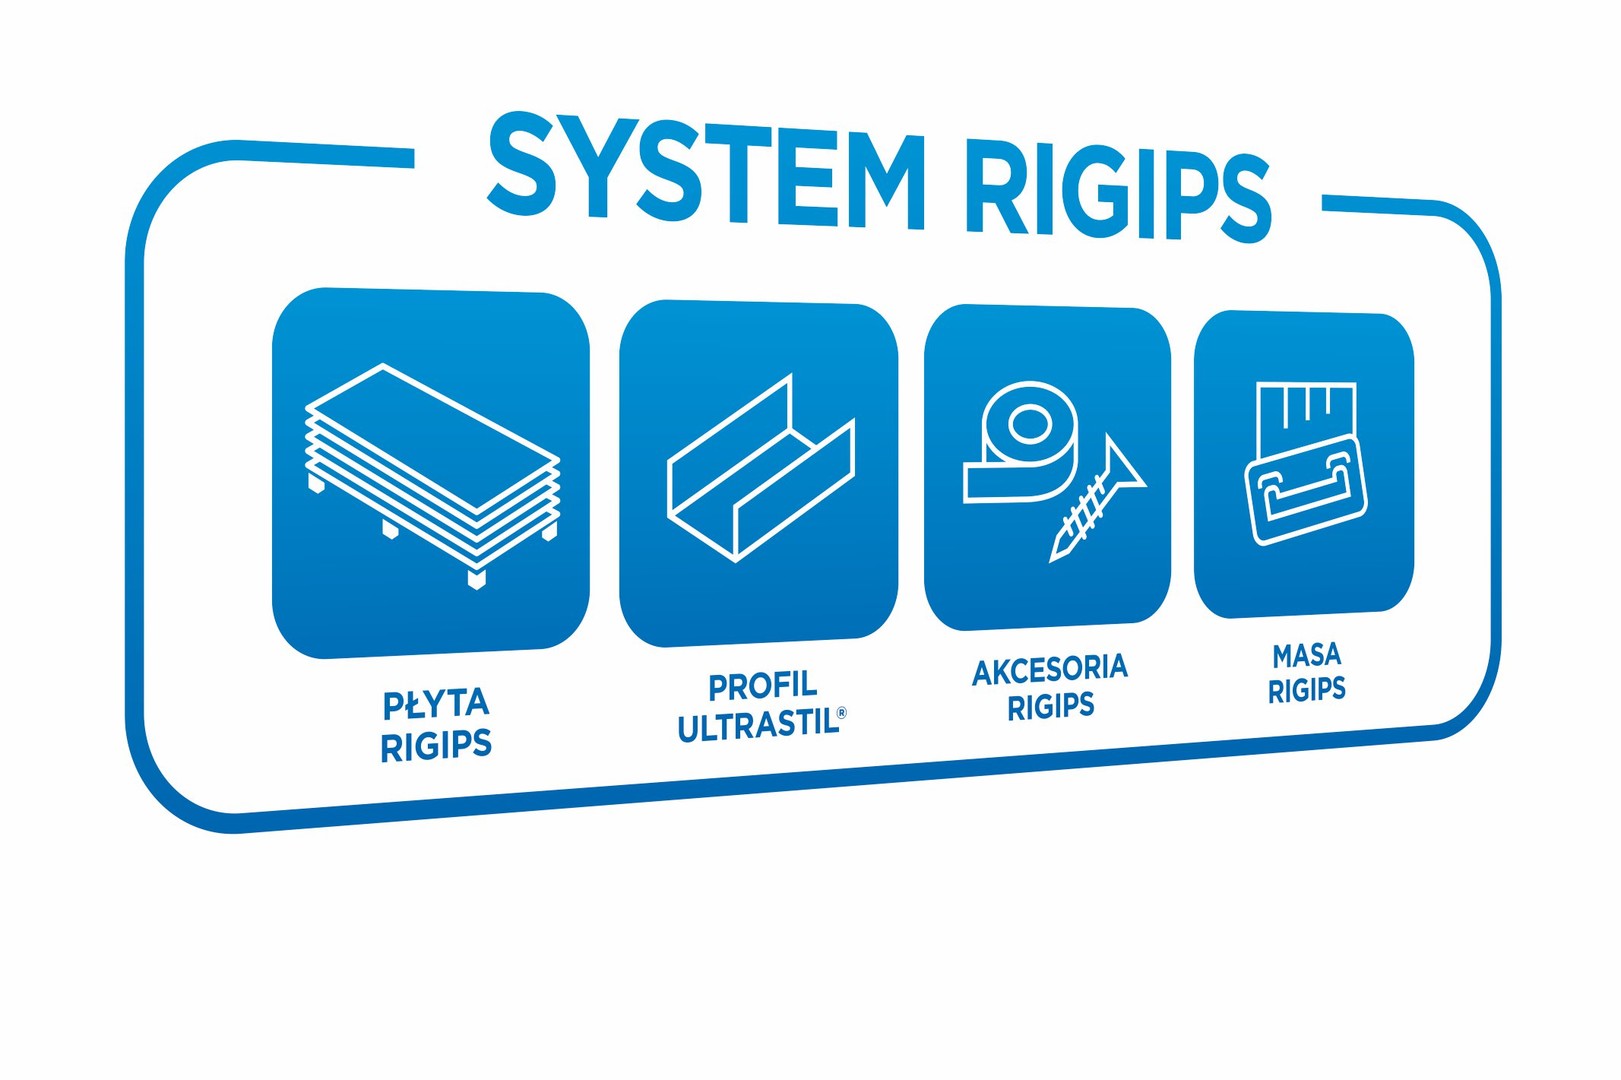 System Rigips